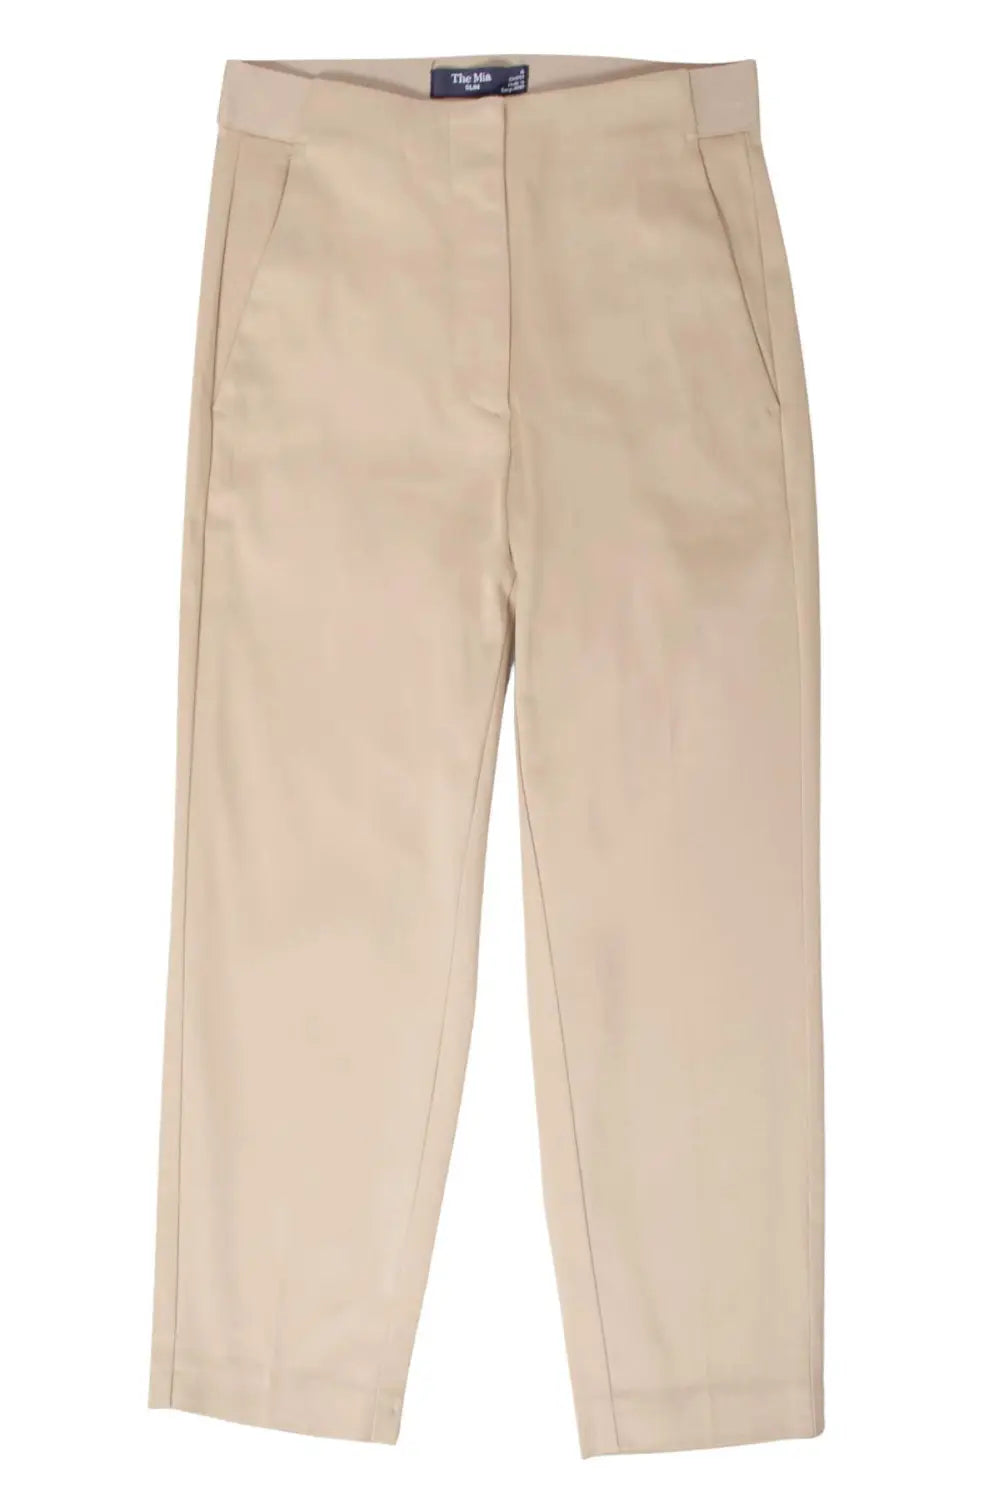 M&S Mia 3/4 Length Crop Trousers